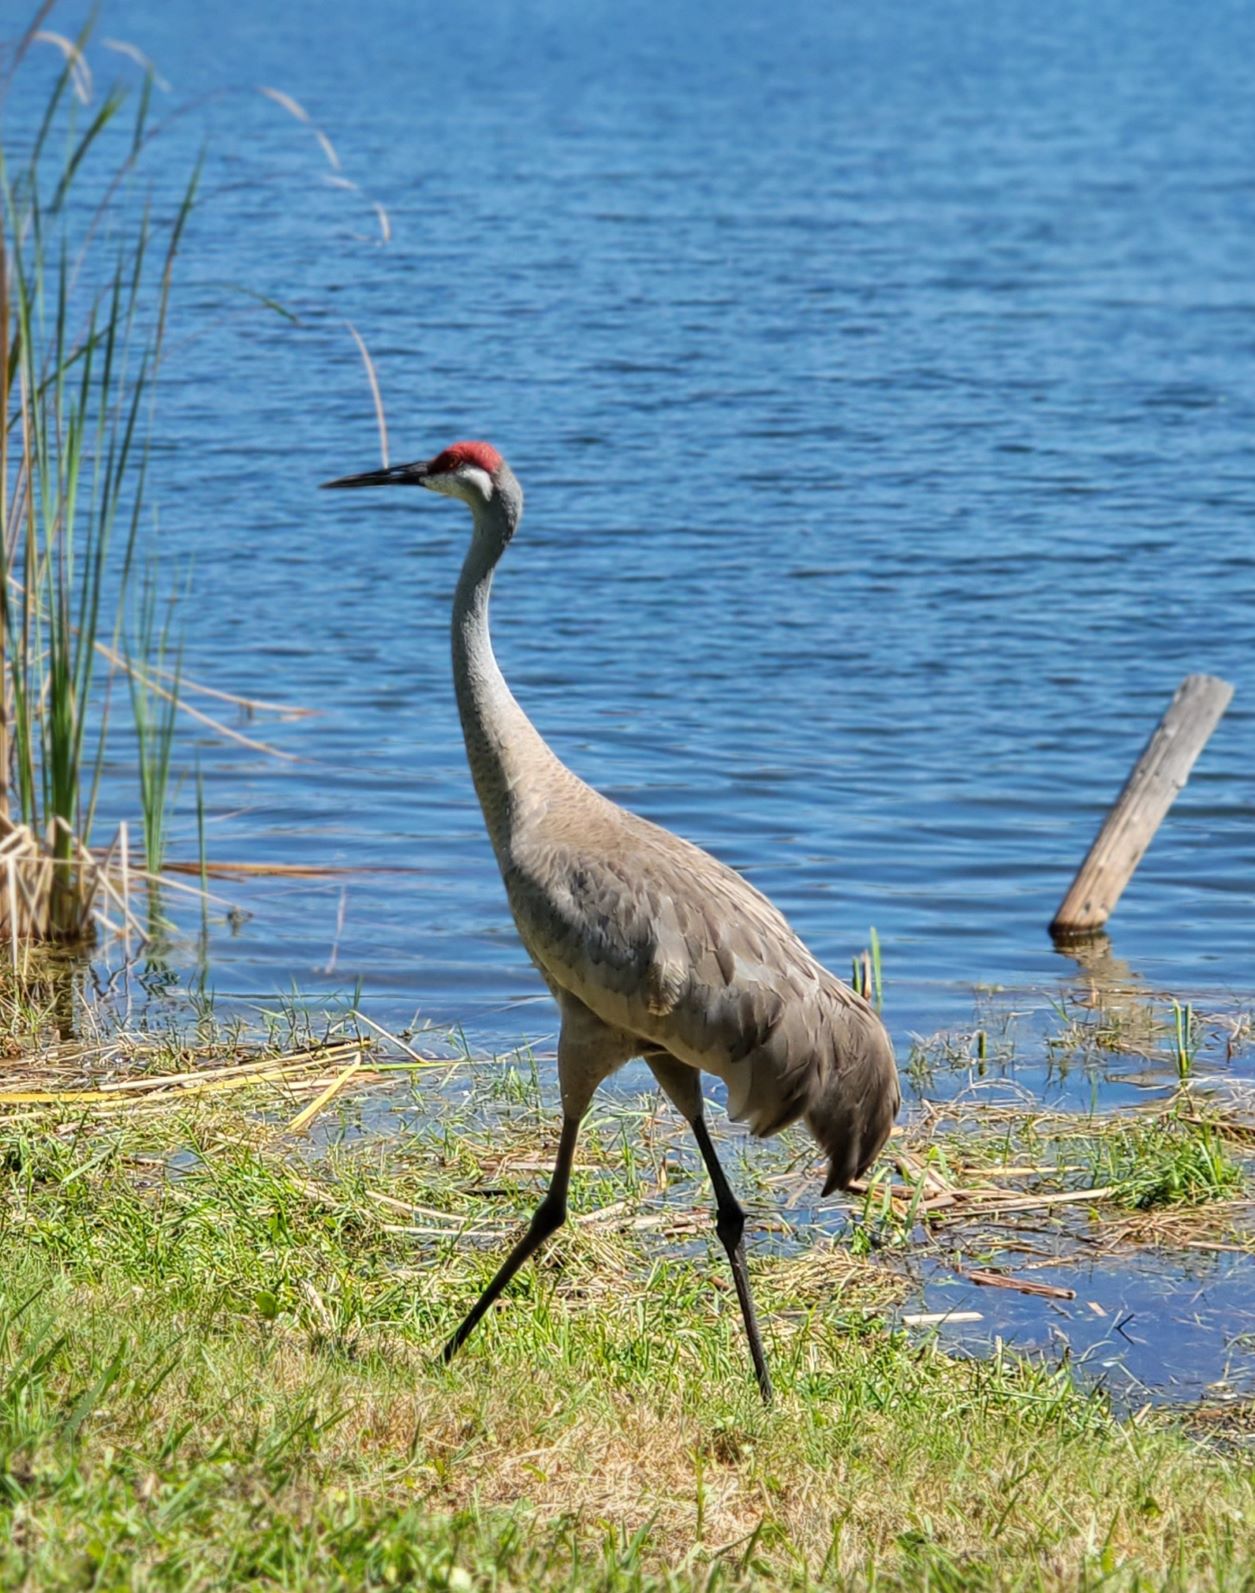 Florida sandhill cranes rule the shoreline around lakes